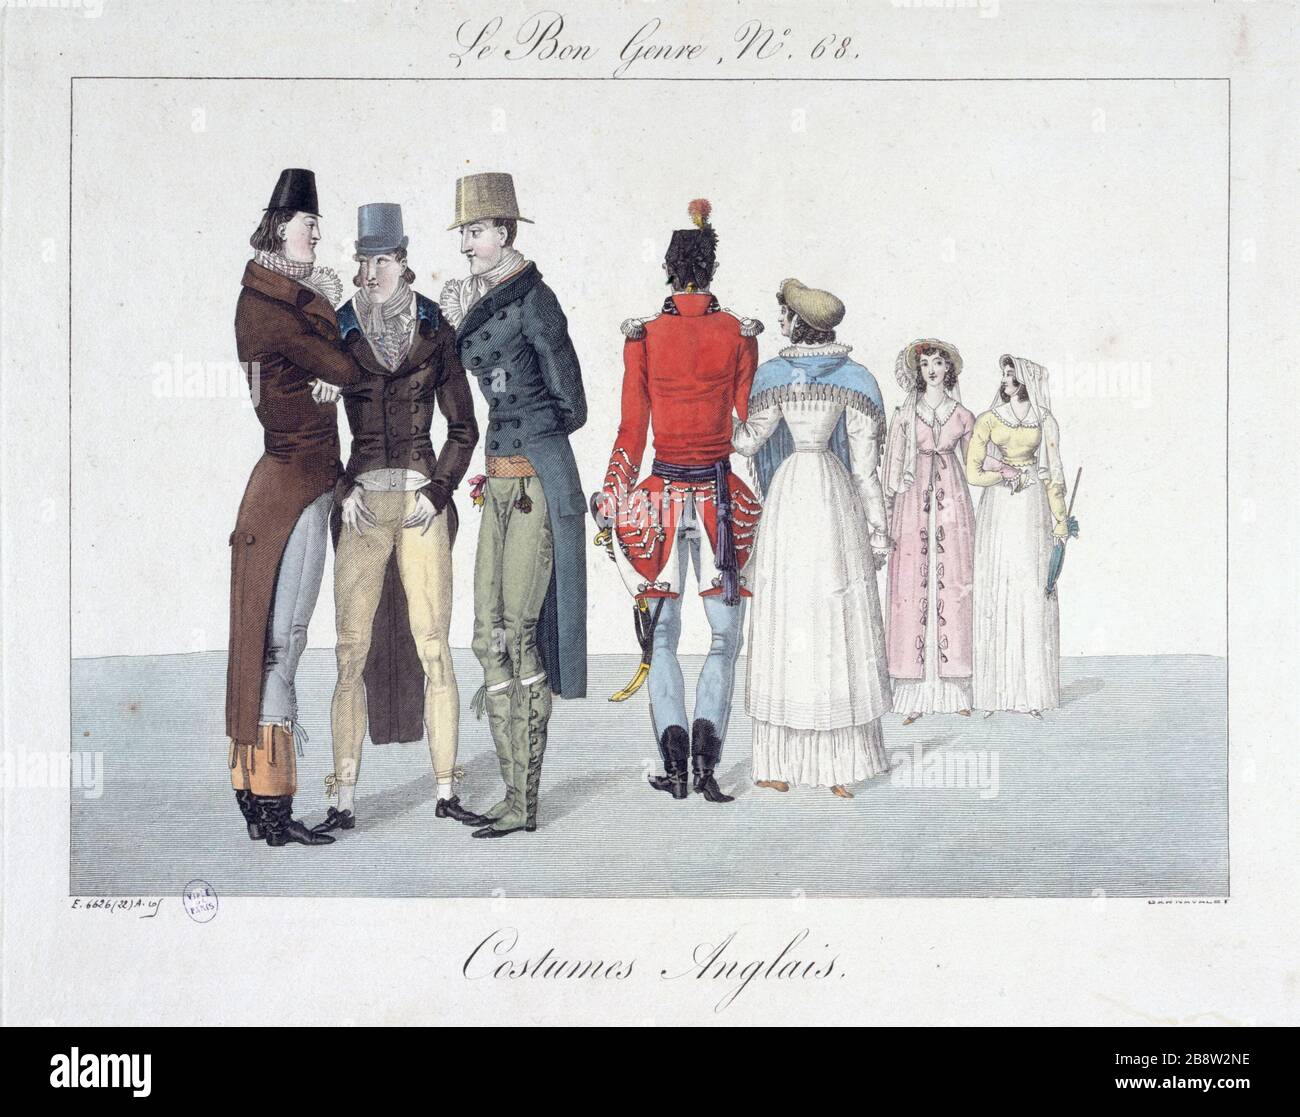 GUTES GESCHLECHT AUSGABE 68 - KOSTÜME ENGLISCH "Le Bon Genre numéro 68, 1814 - Kostüme anglais". Tiefdruck. Paris, musée Carnavalet. Stockfoto